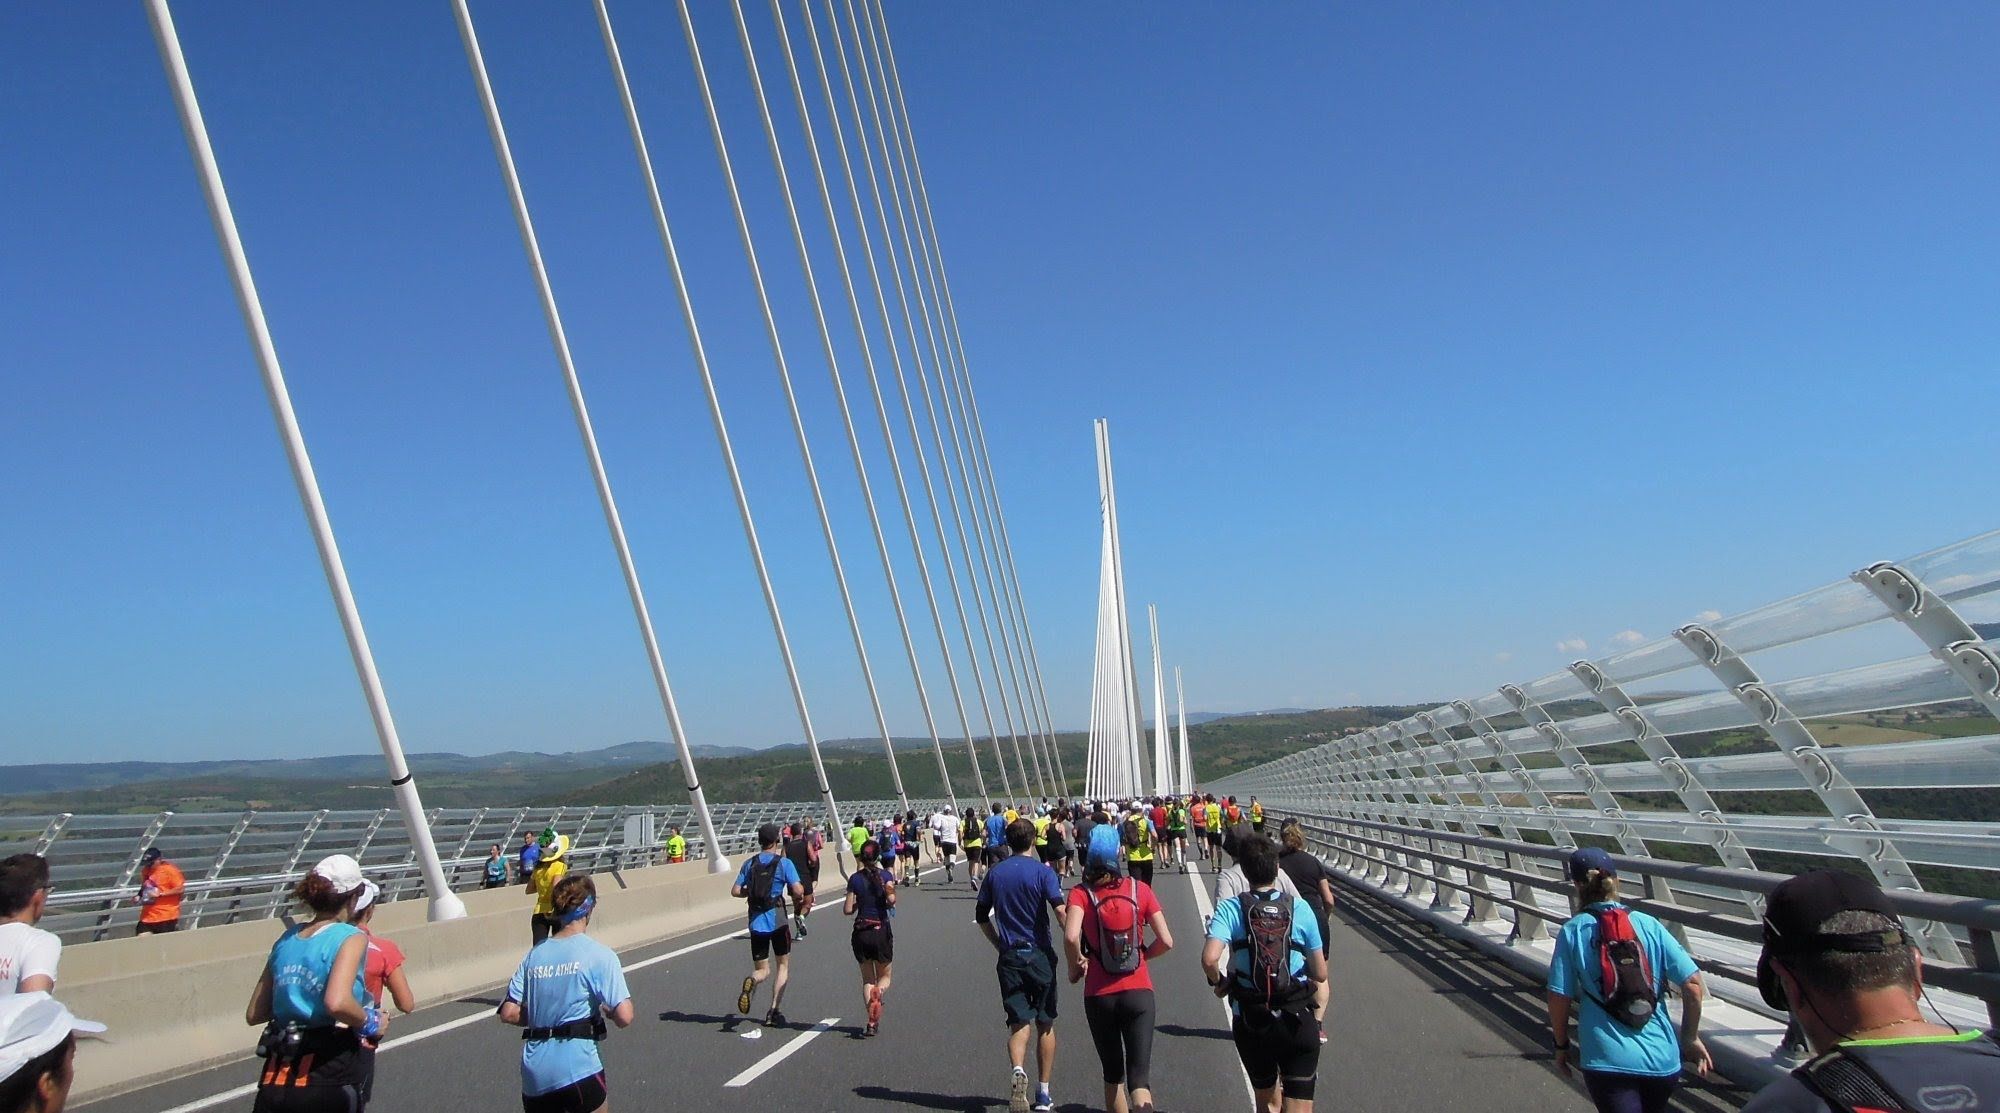 La Course Eiffage du Viaduc de Millau 2014 ミヨー高架橋レース